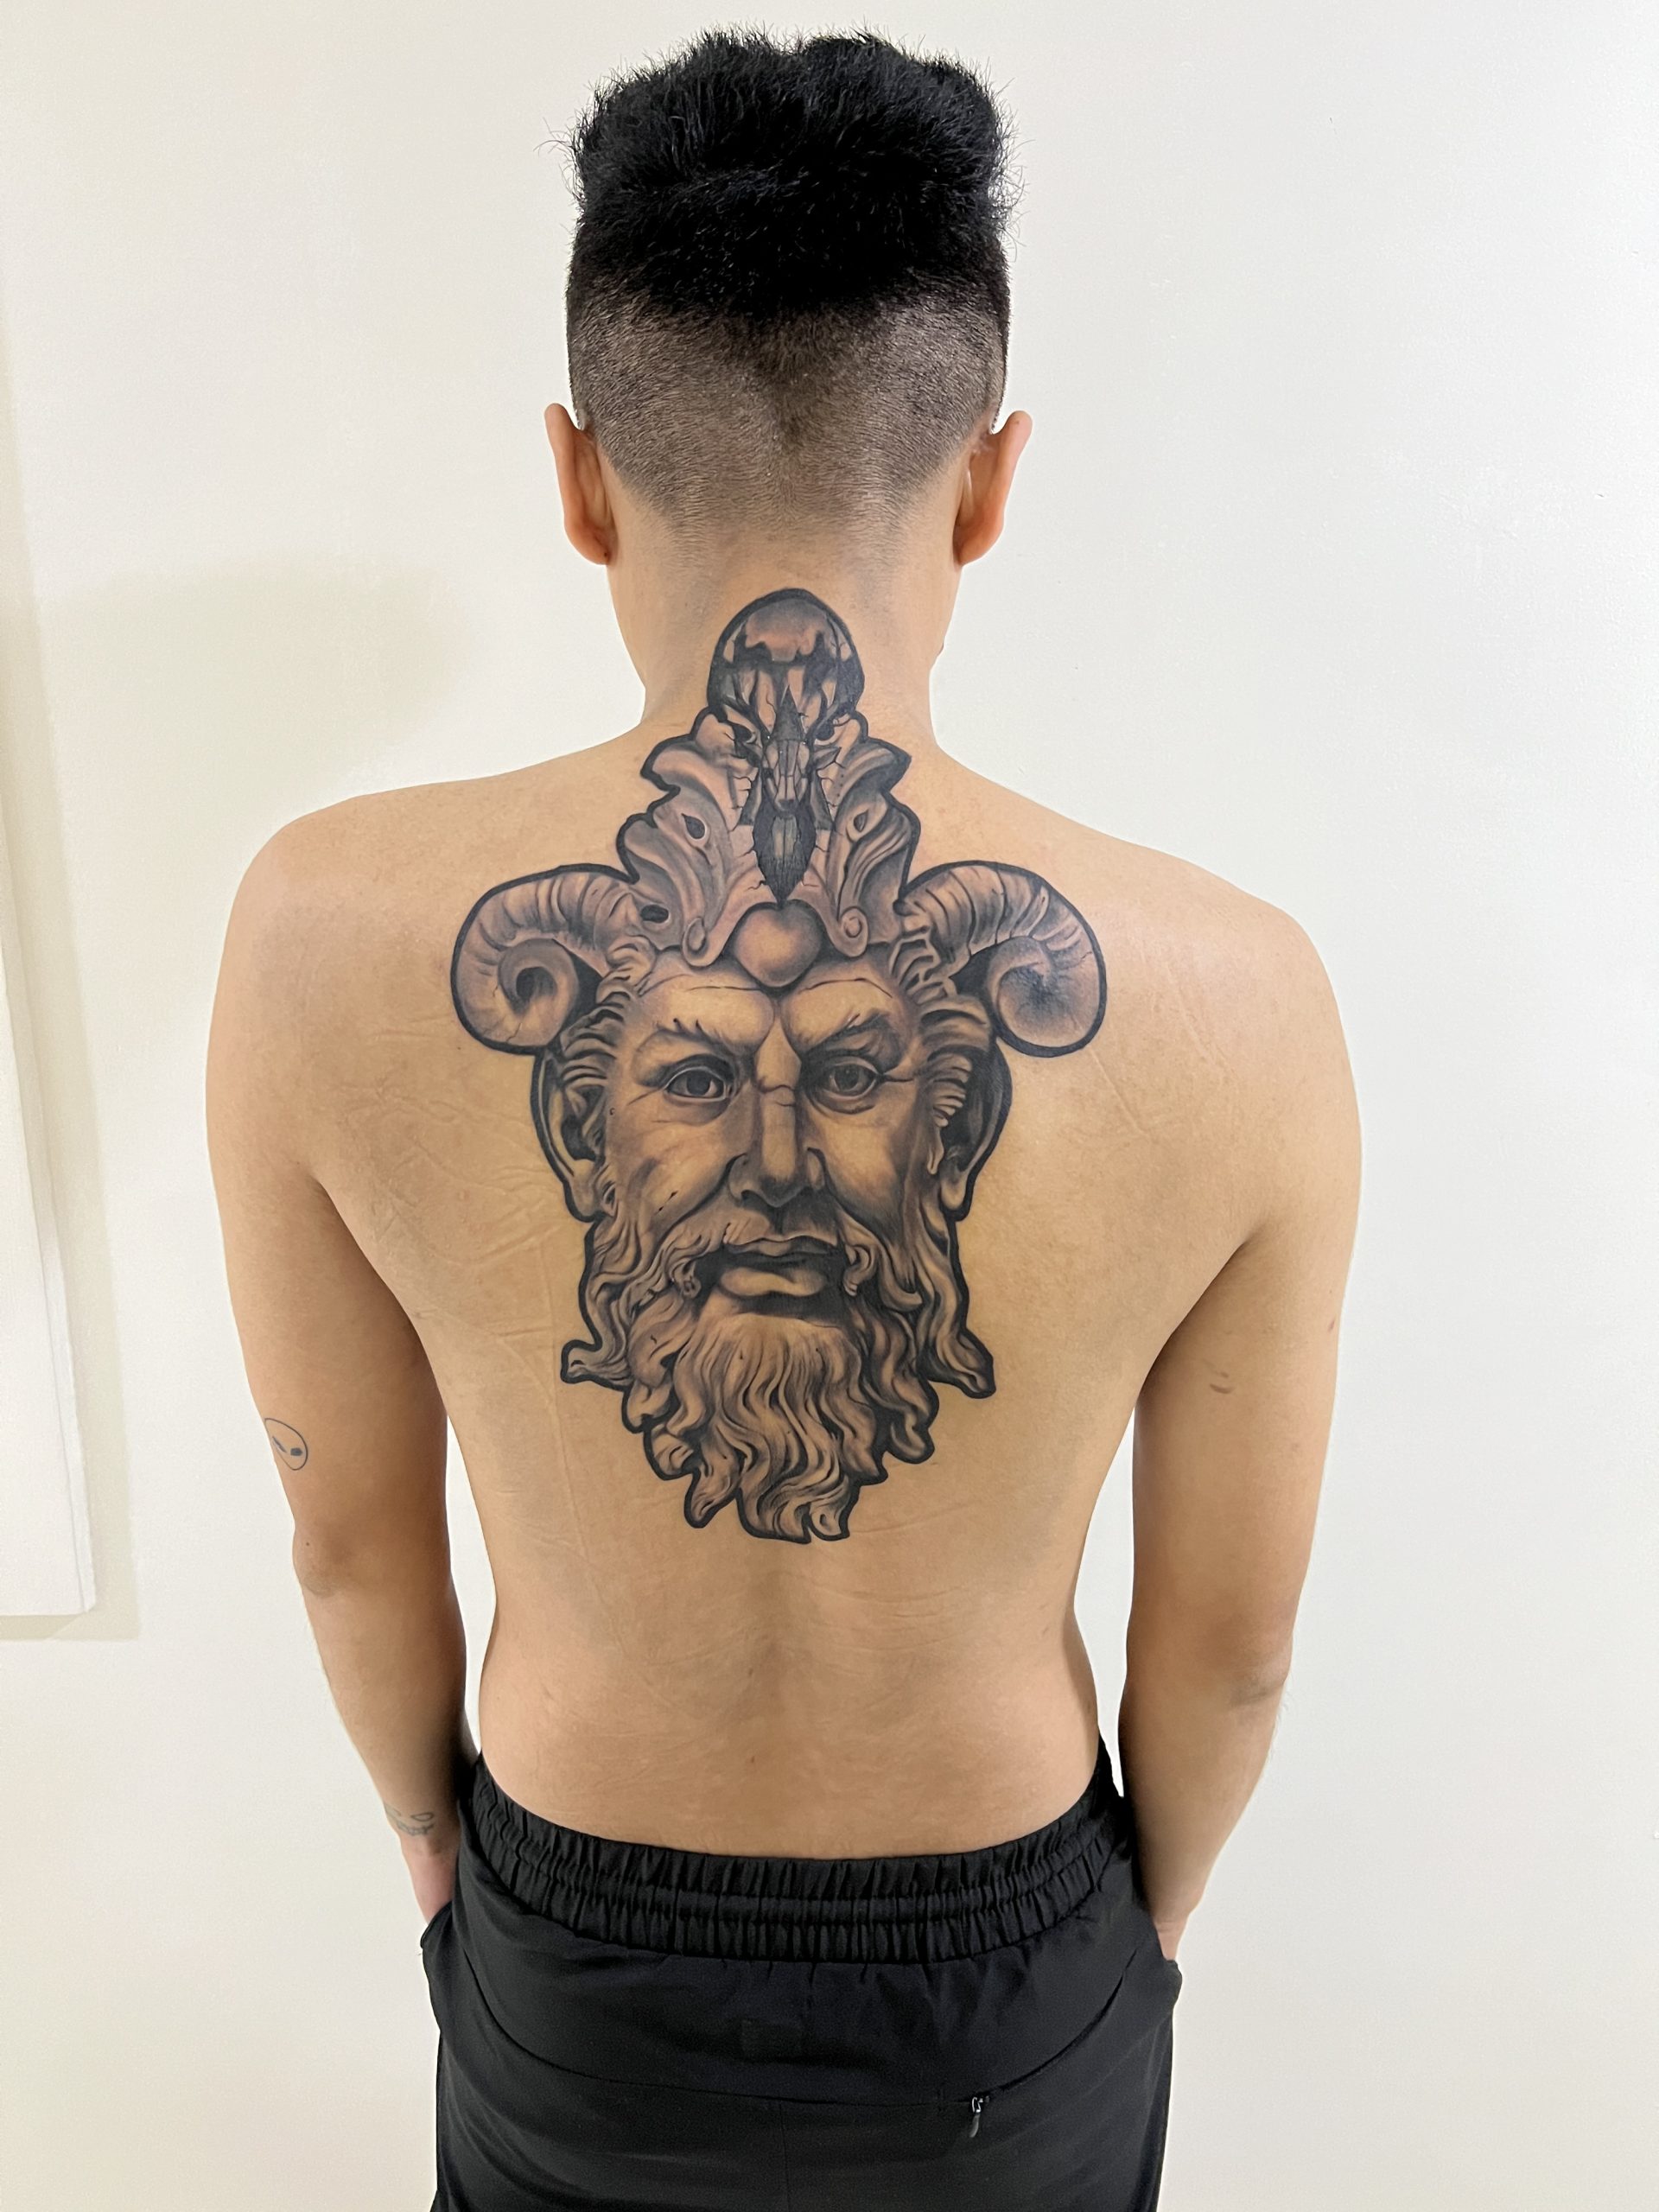 Share 74 about ravana tattoo design unmissable  indaotaonec